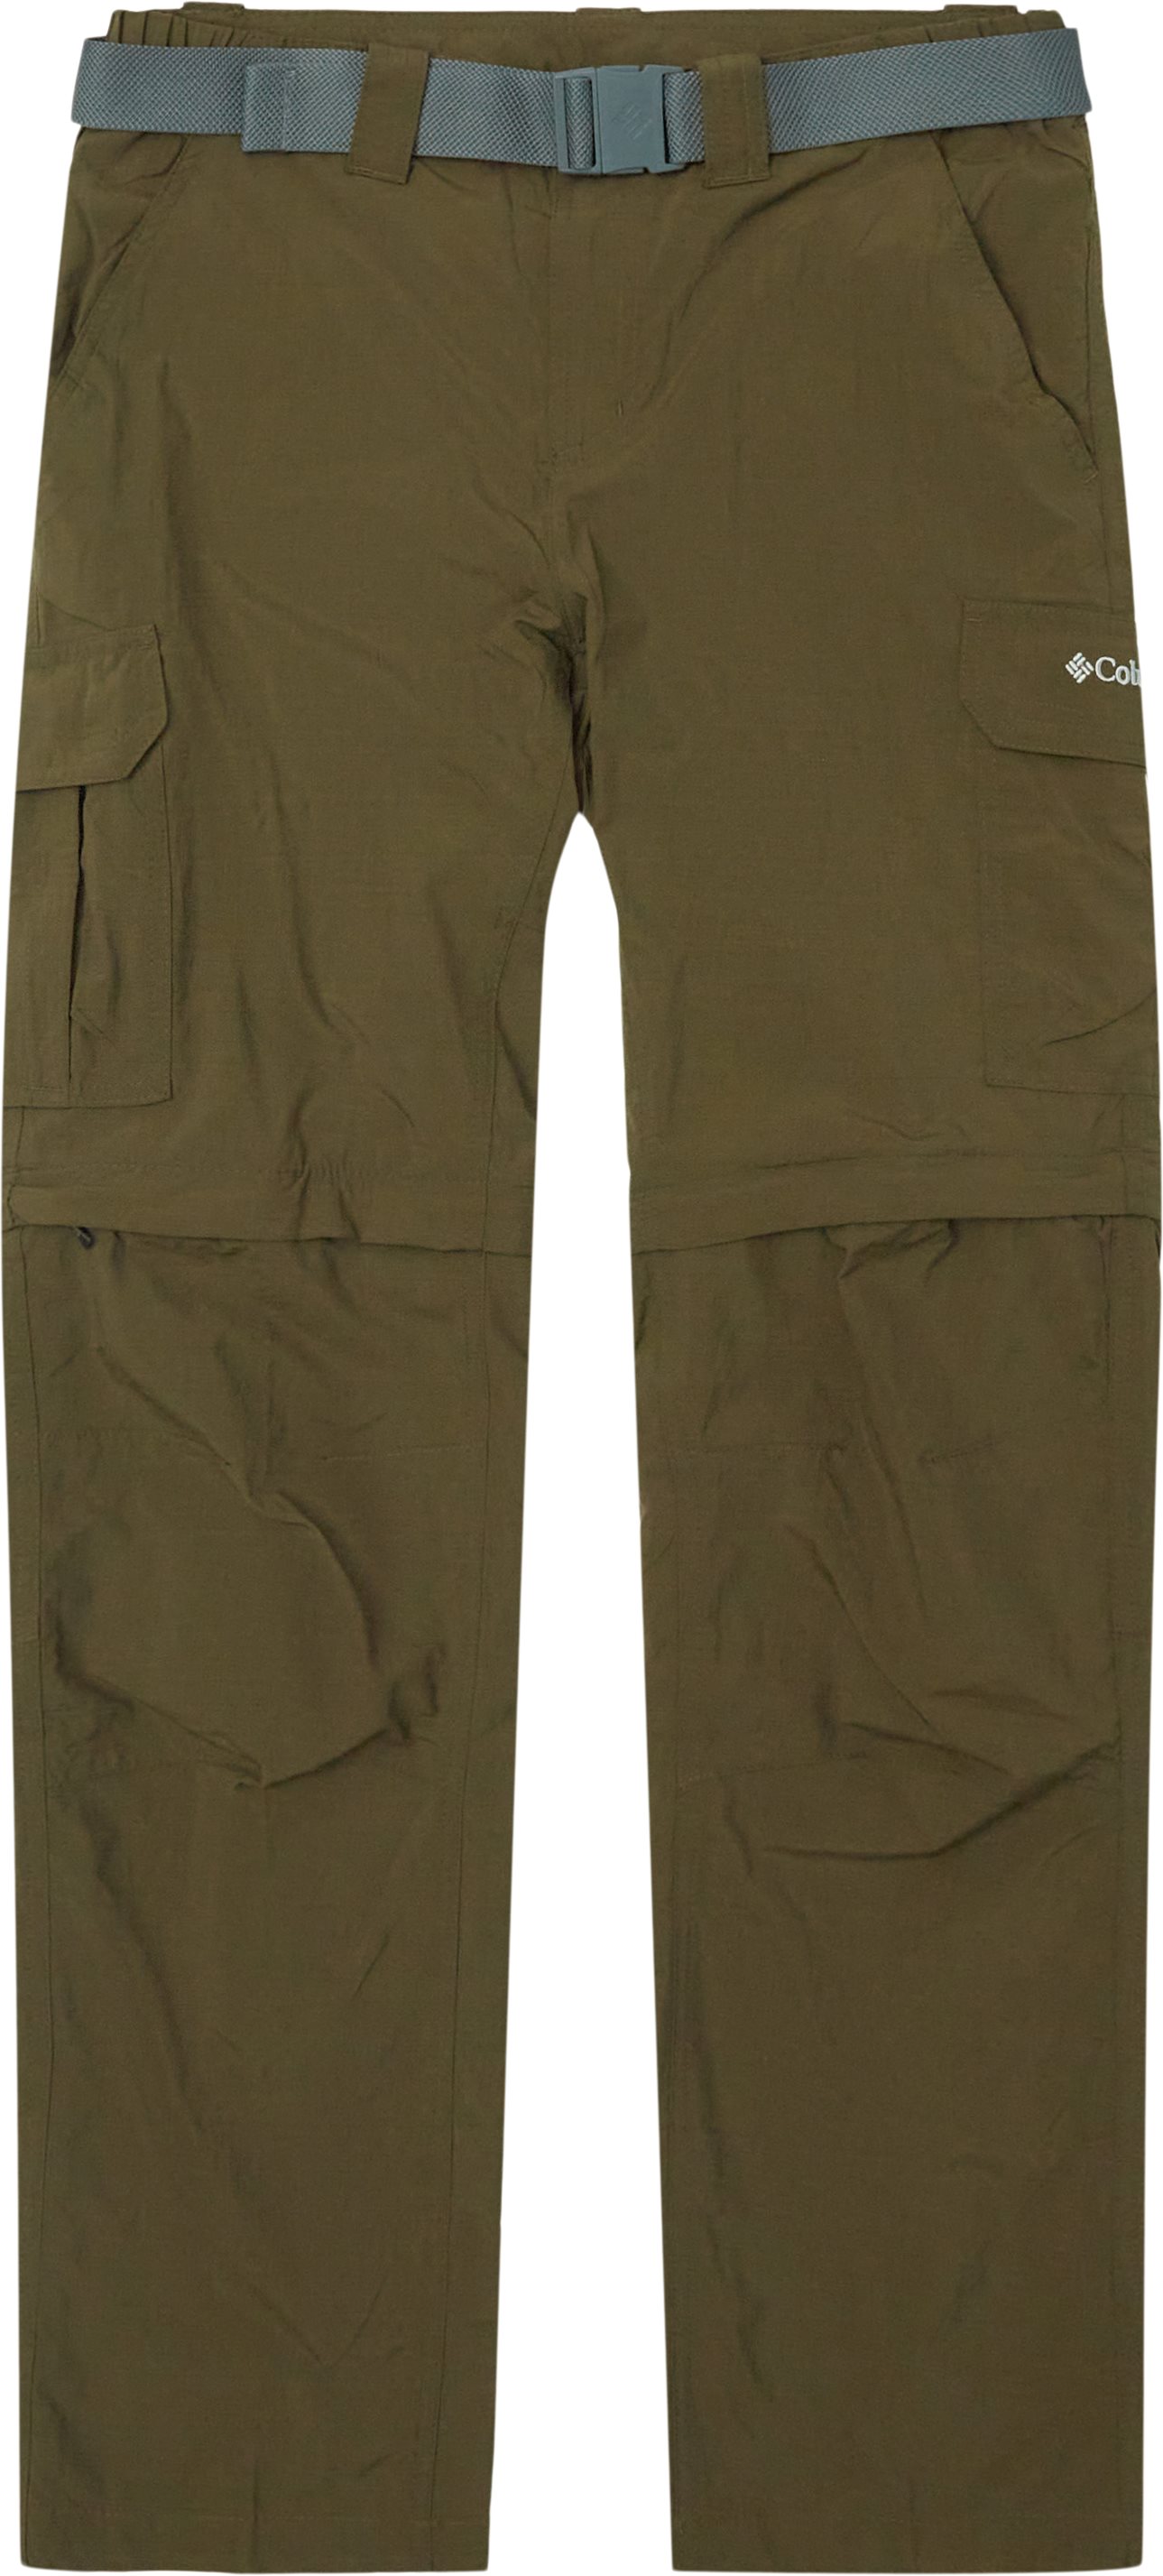 Silver Ridge II Convertible Pant - Trousers - Regular fit - Army